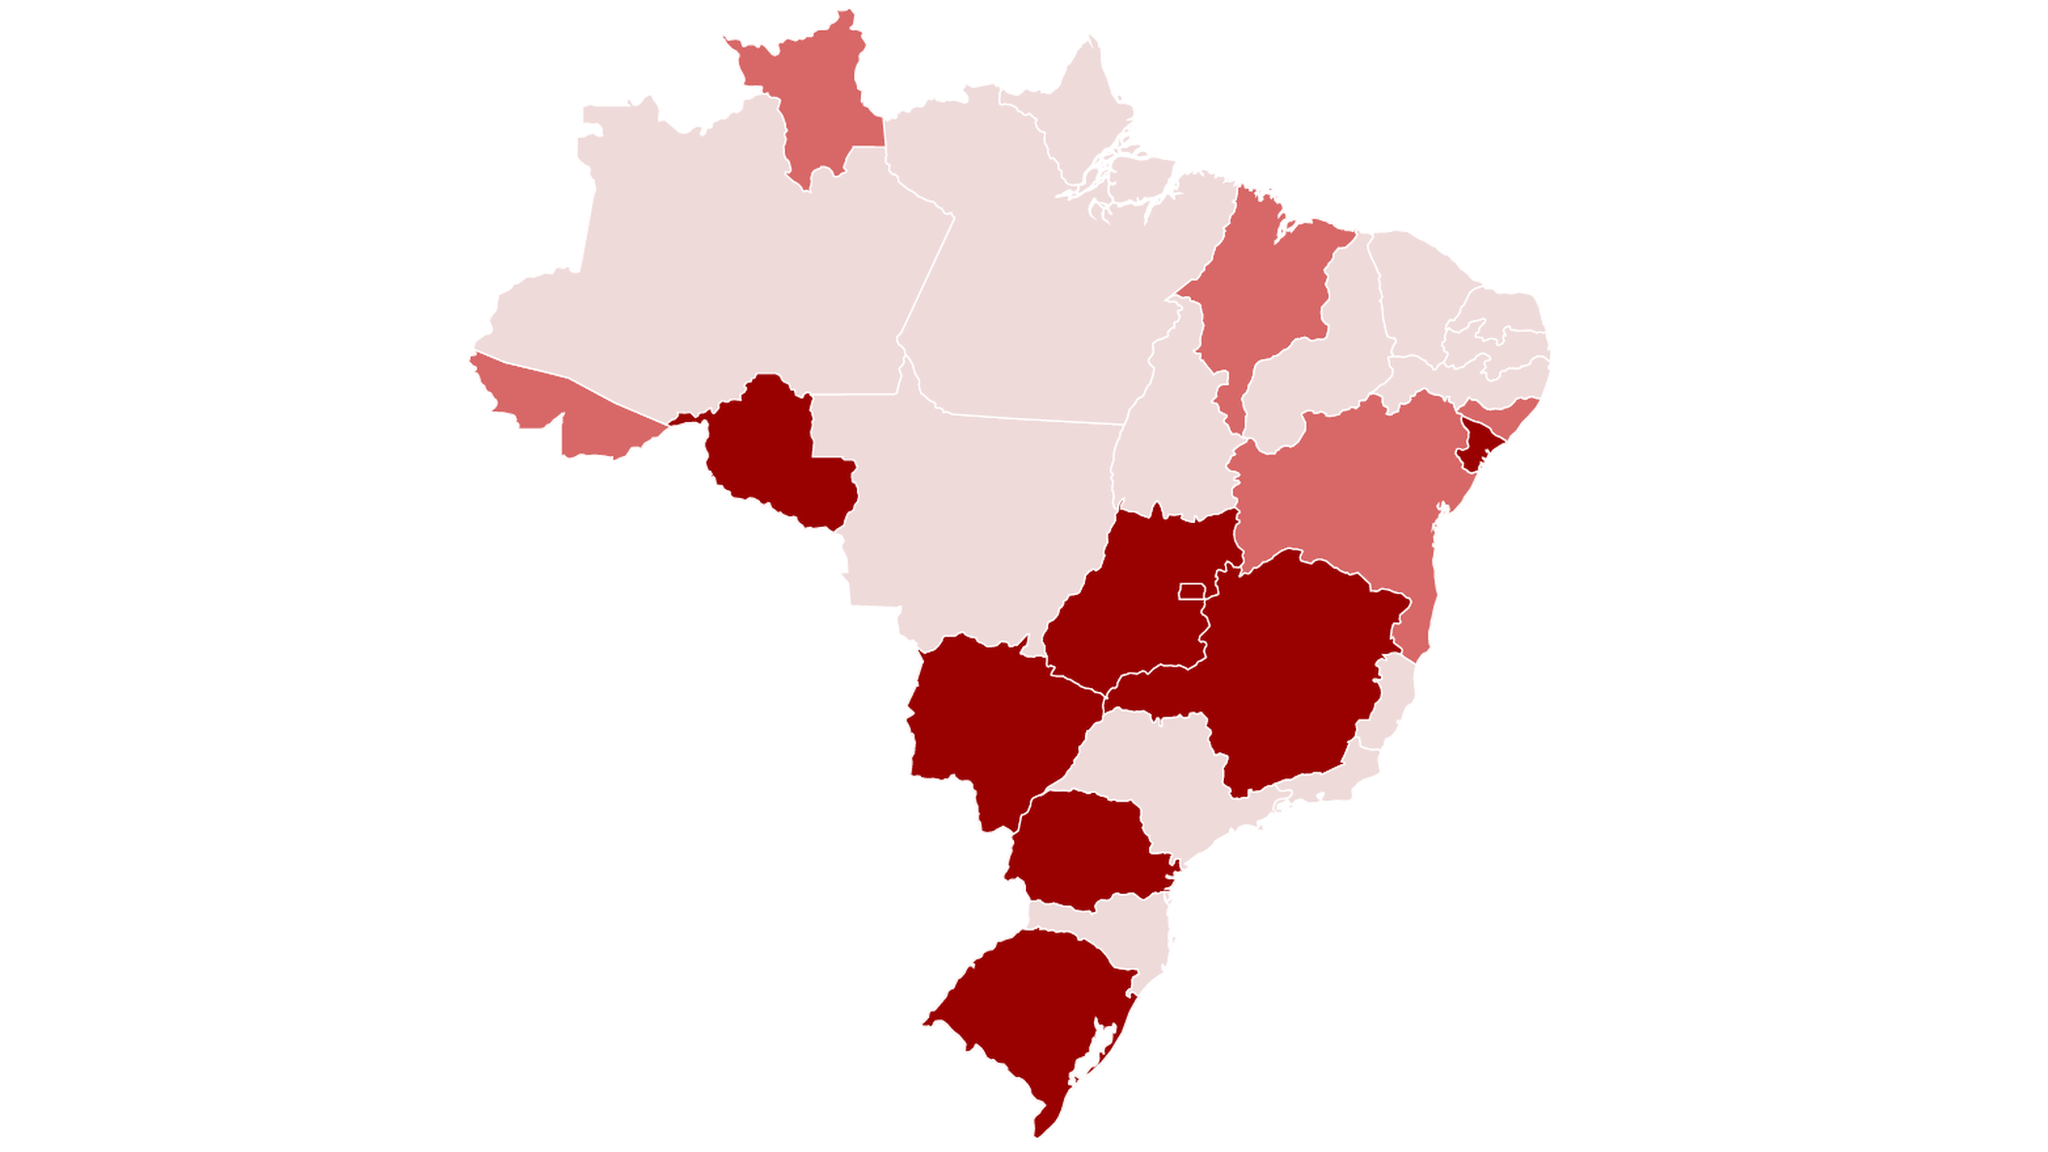 gráfico com tendencias da pandemia no brasil